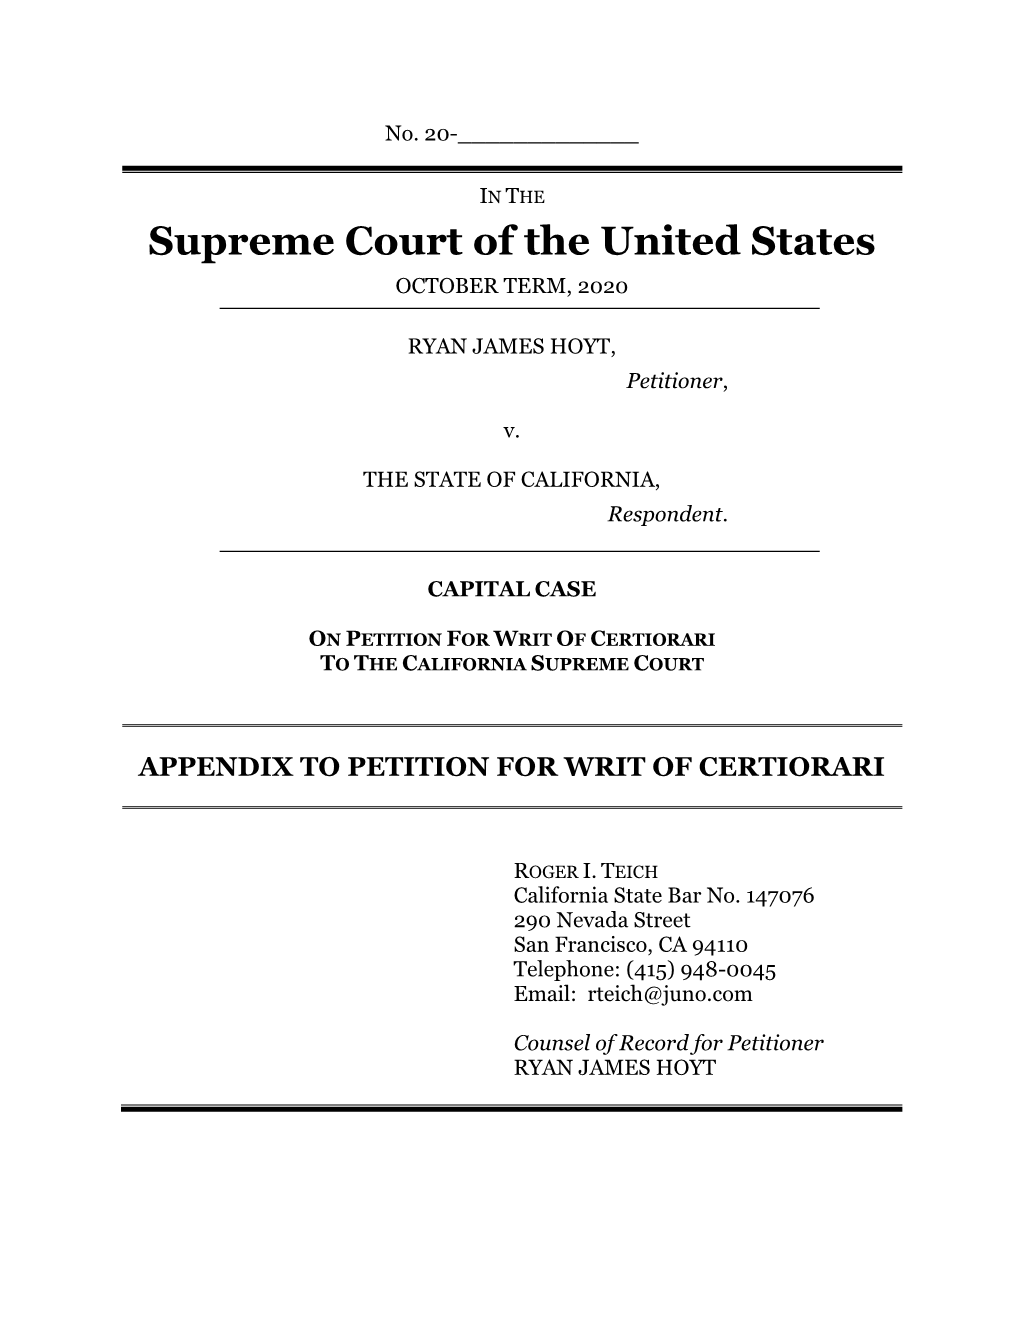 Appendix to Petition for Writ of Certiorari